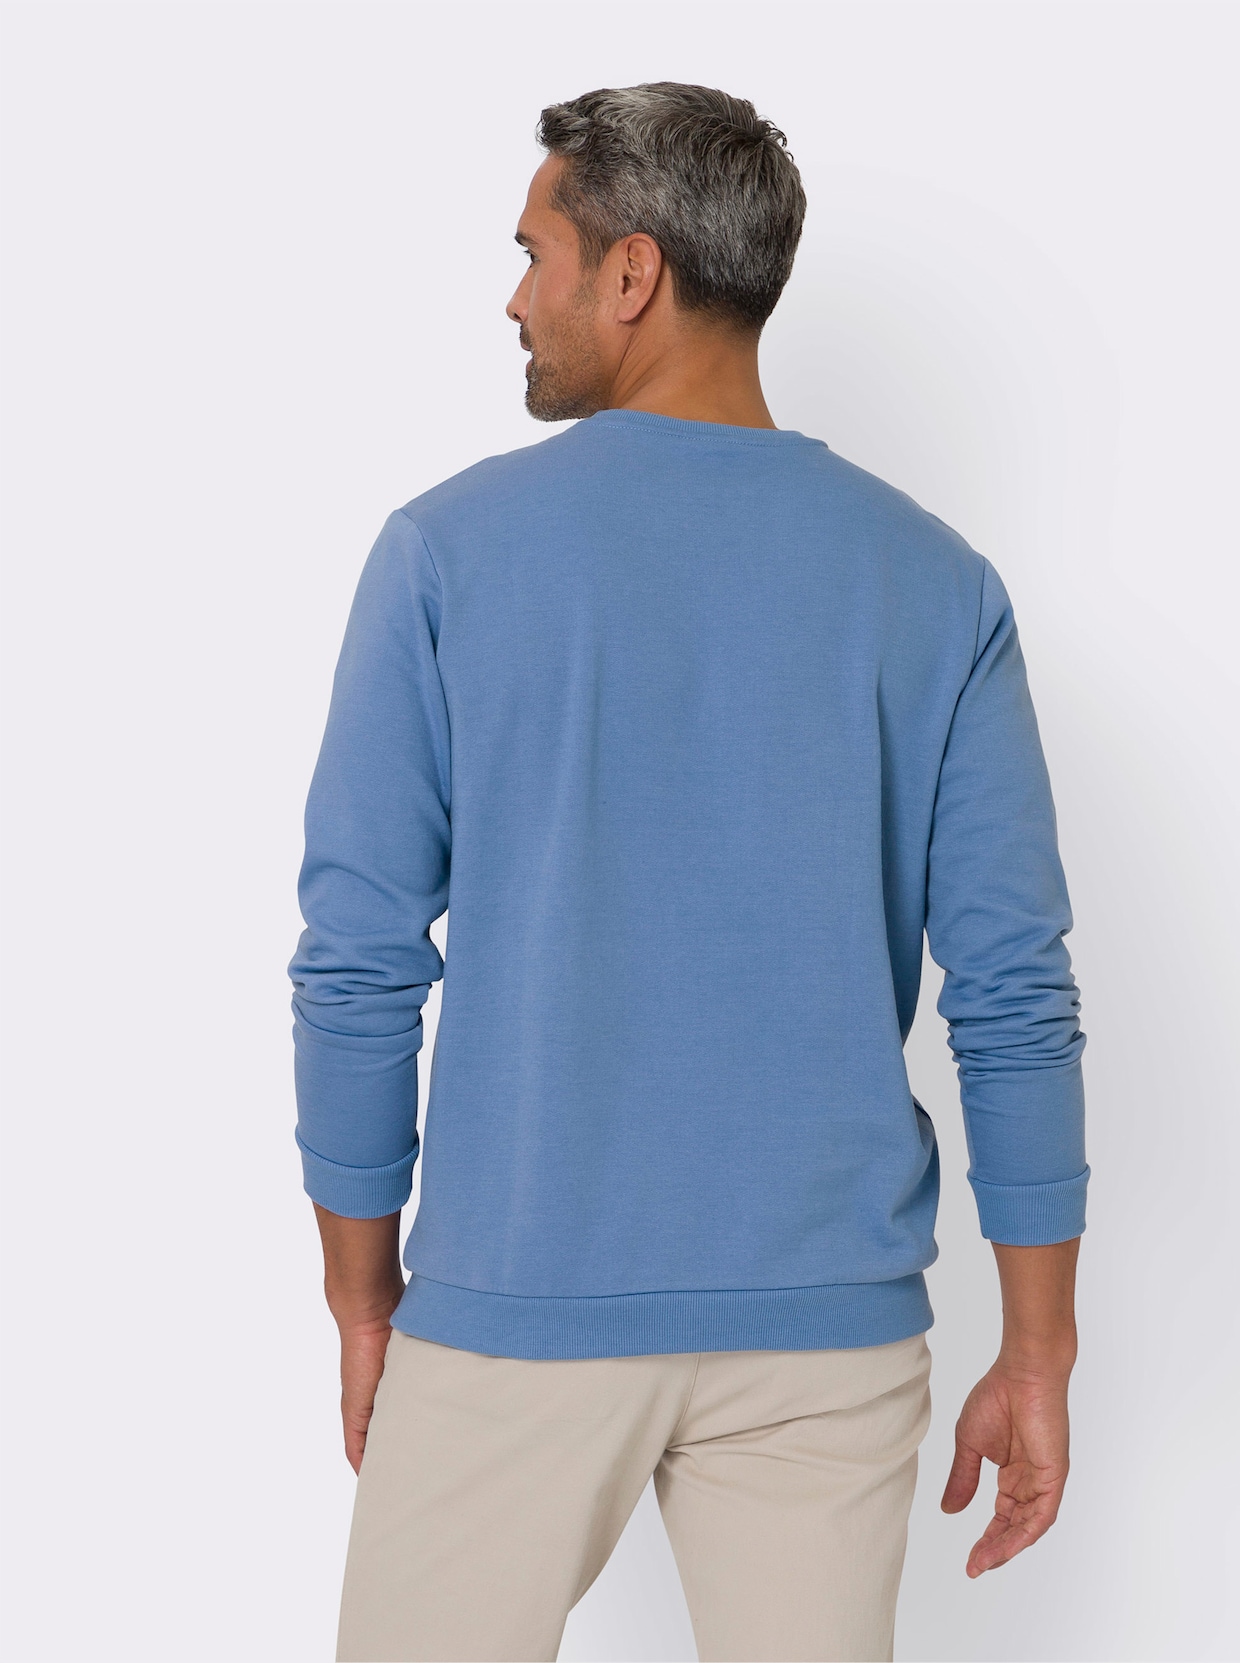 Sweatshirt - himmelblau